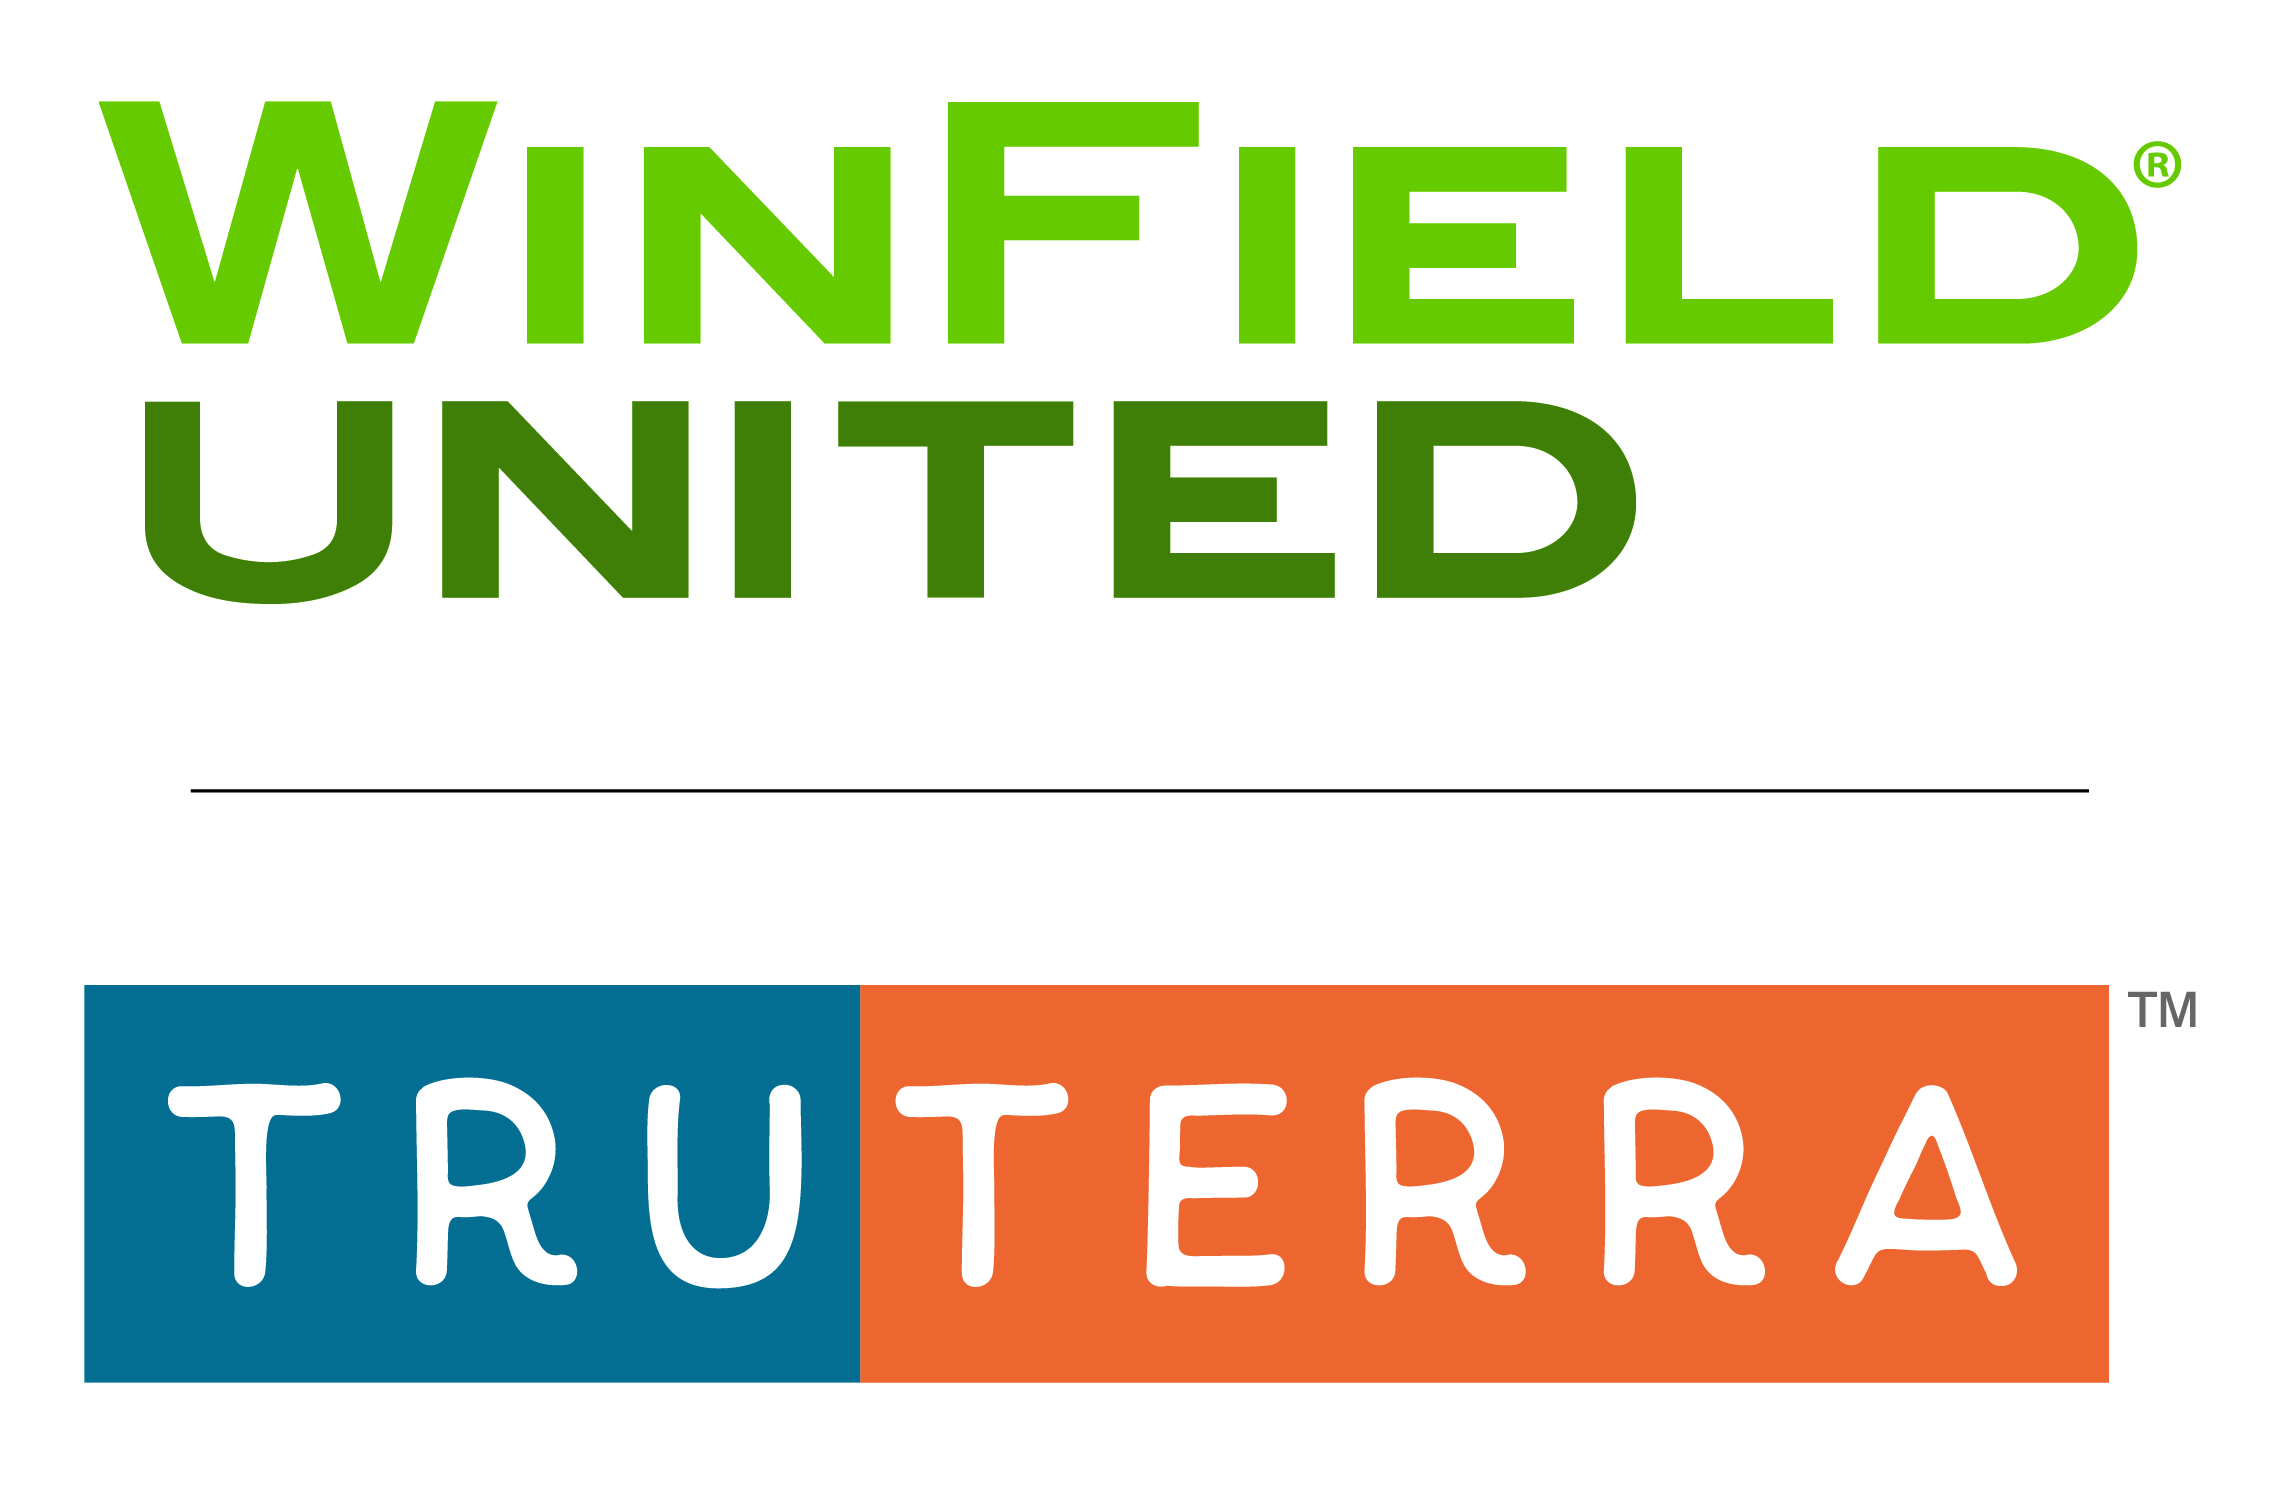 WinField United and Truterra, LLC